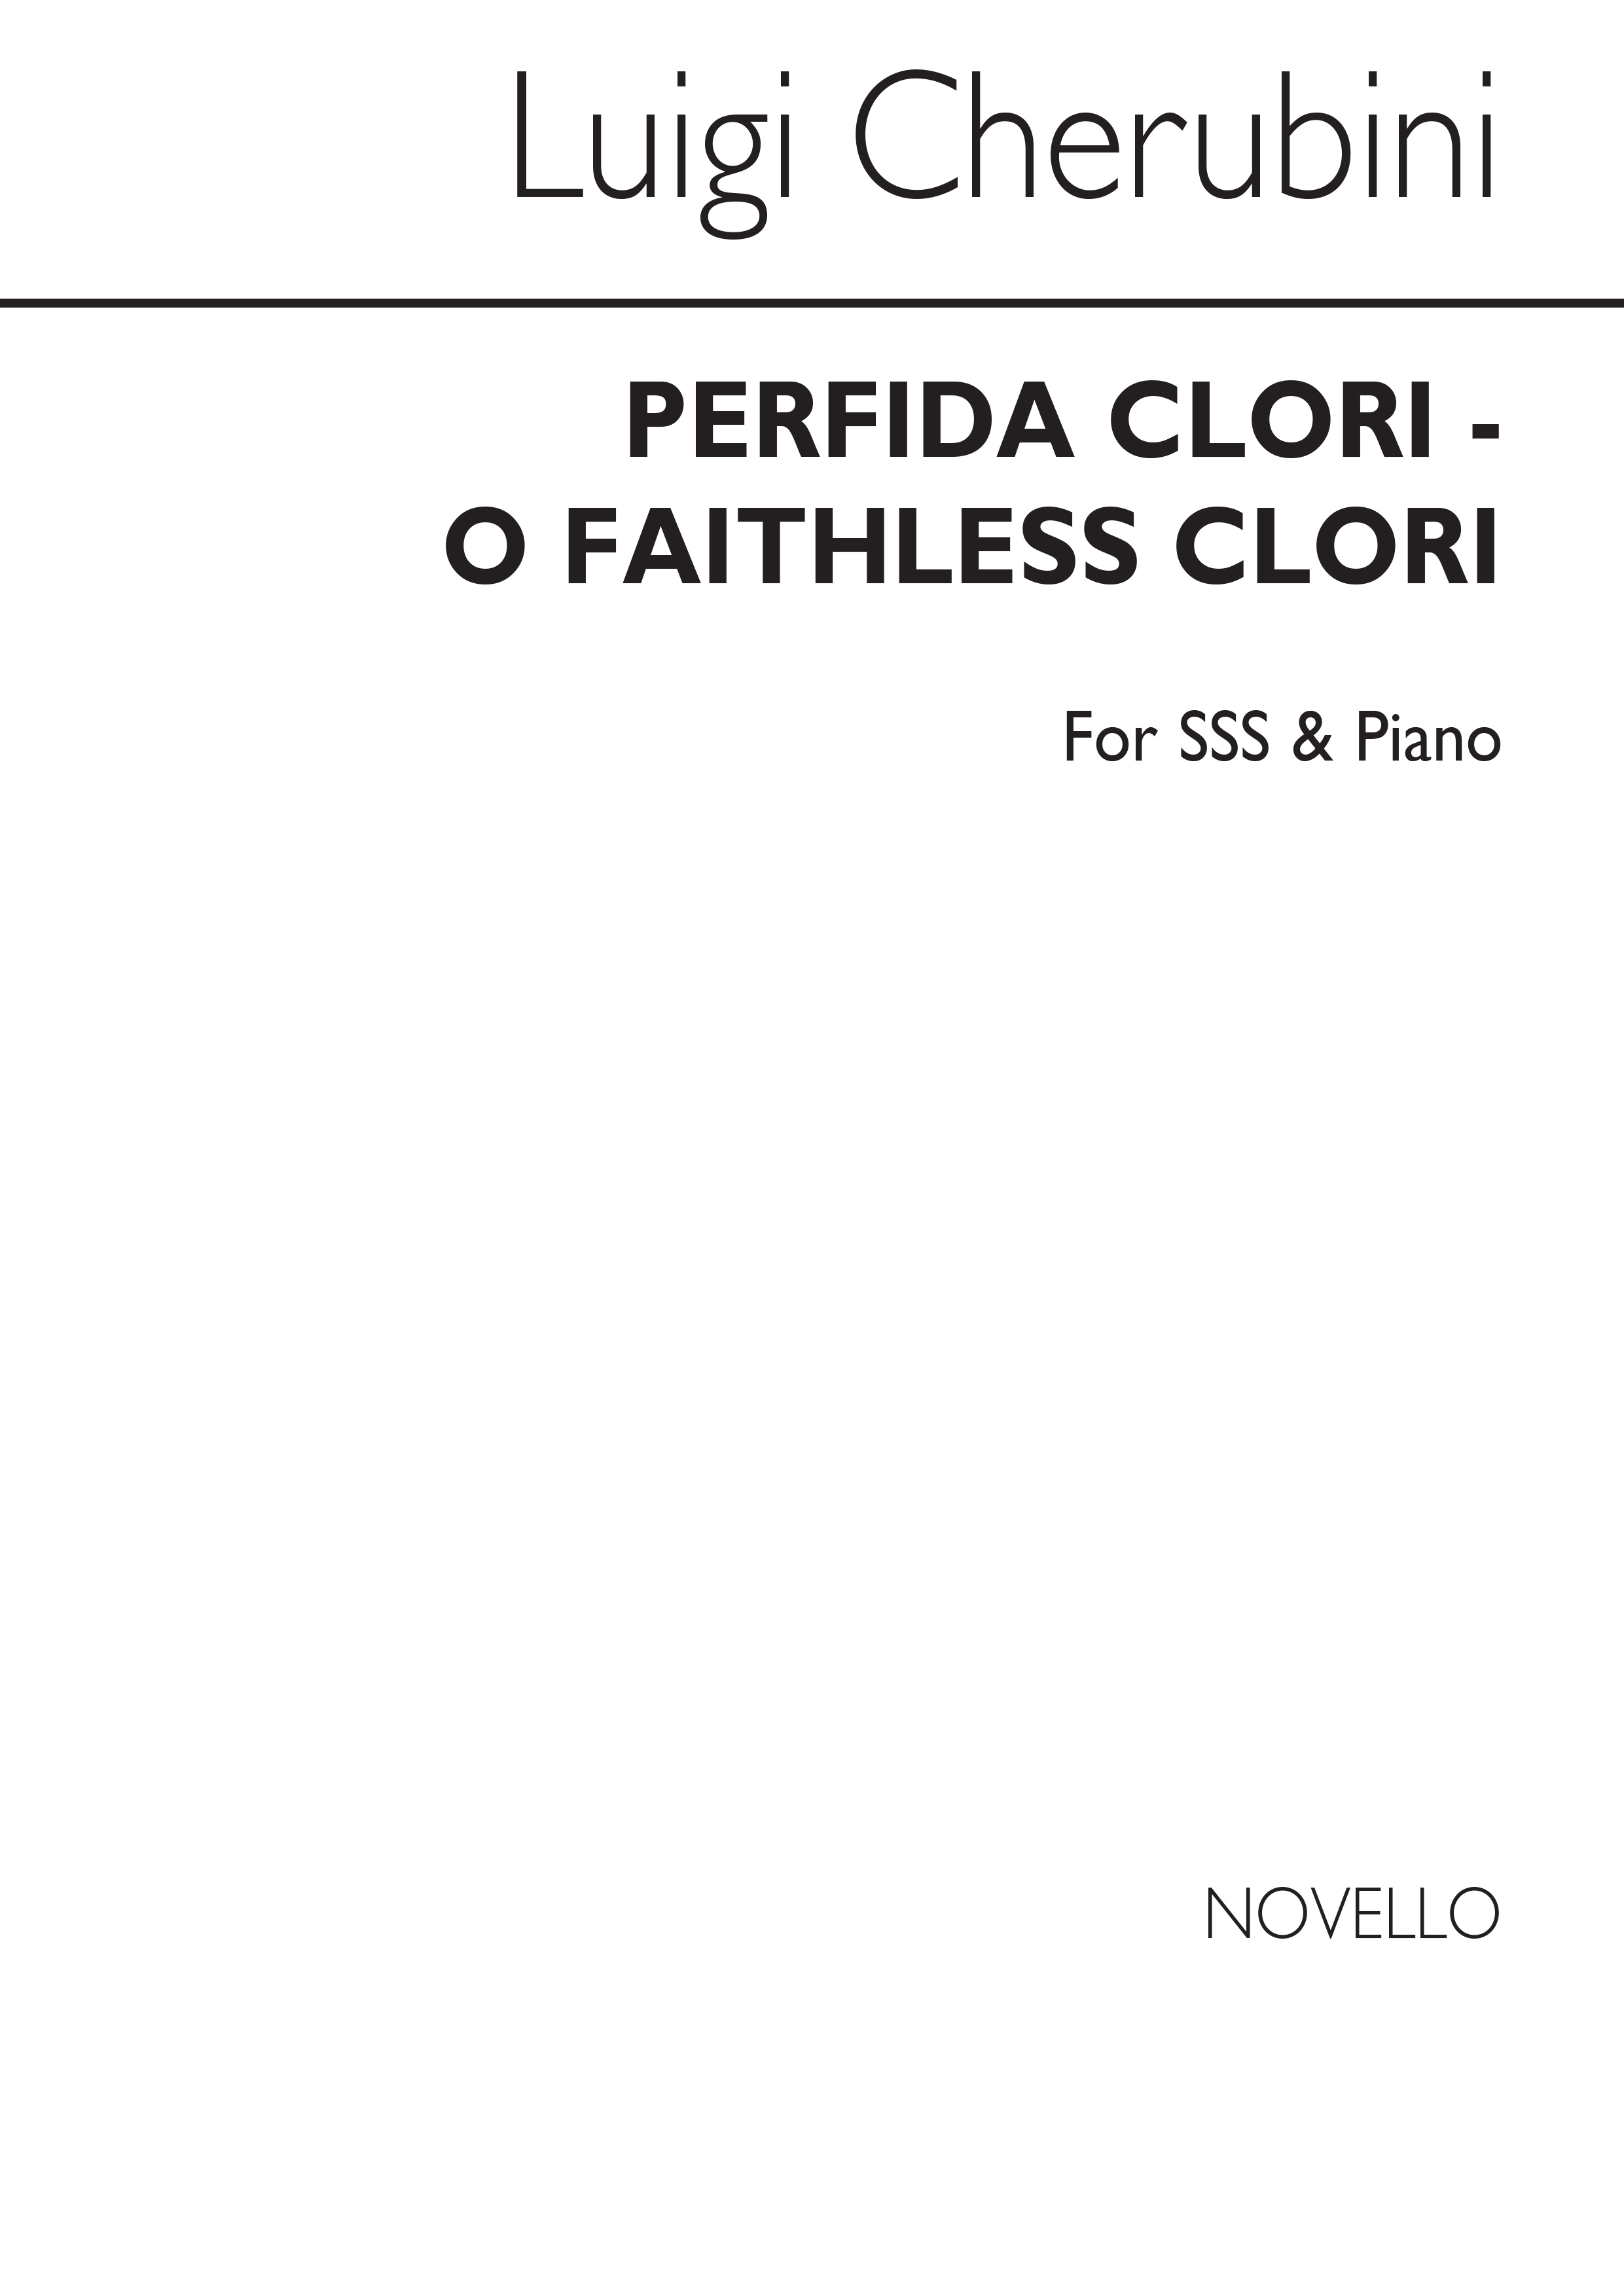 Luigi Cherubini: Perfida Clori (O Faithless Clori) Sss/Piano: Upper Voices: